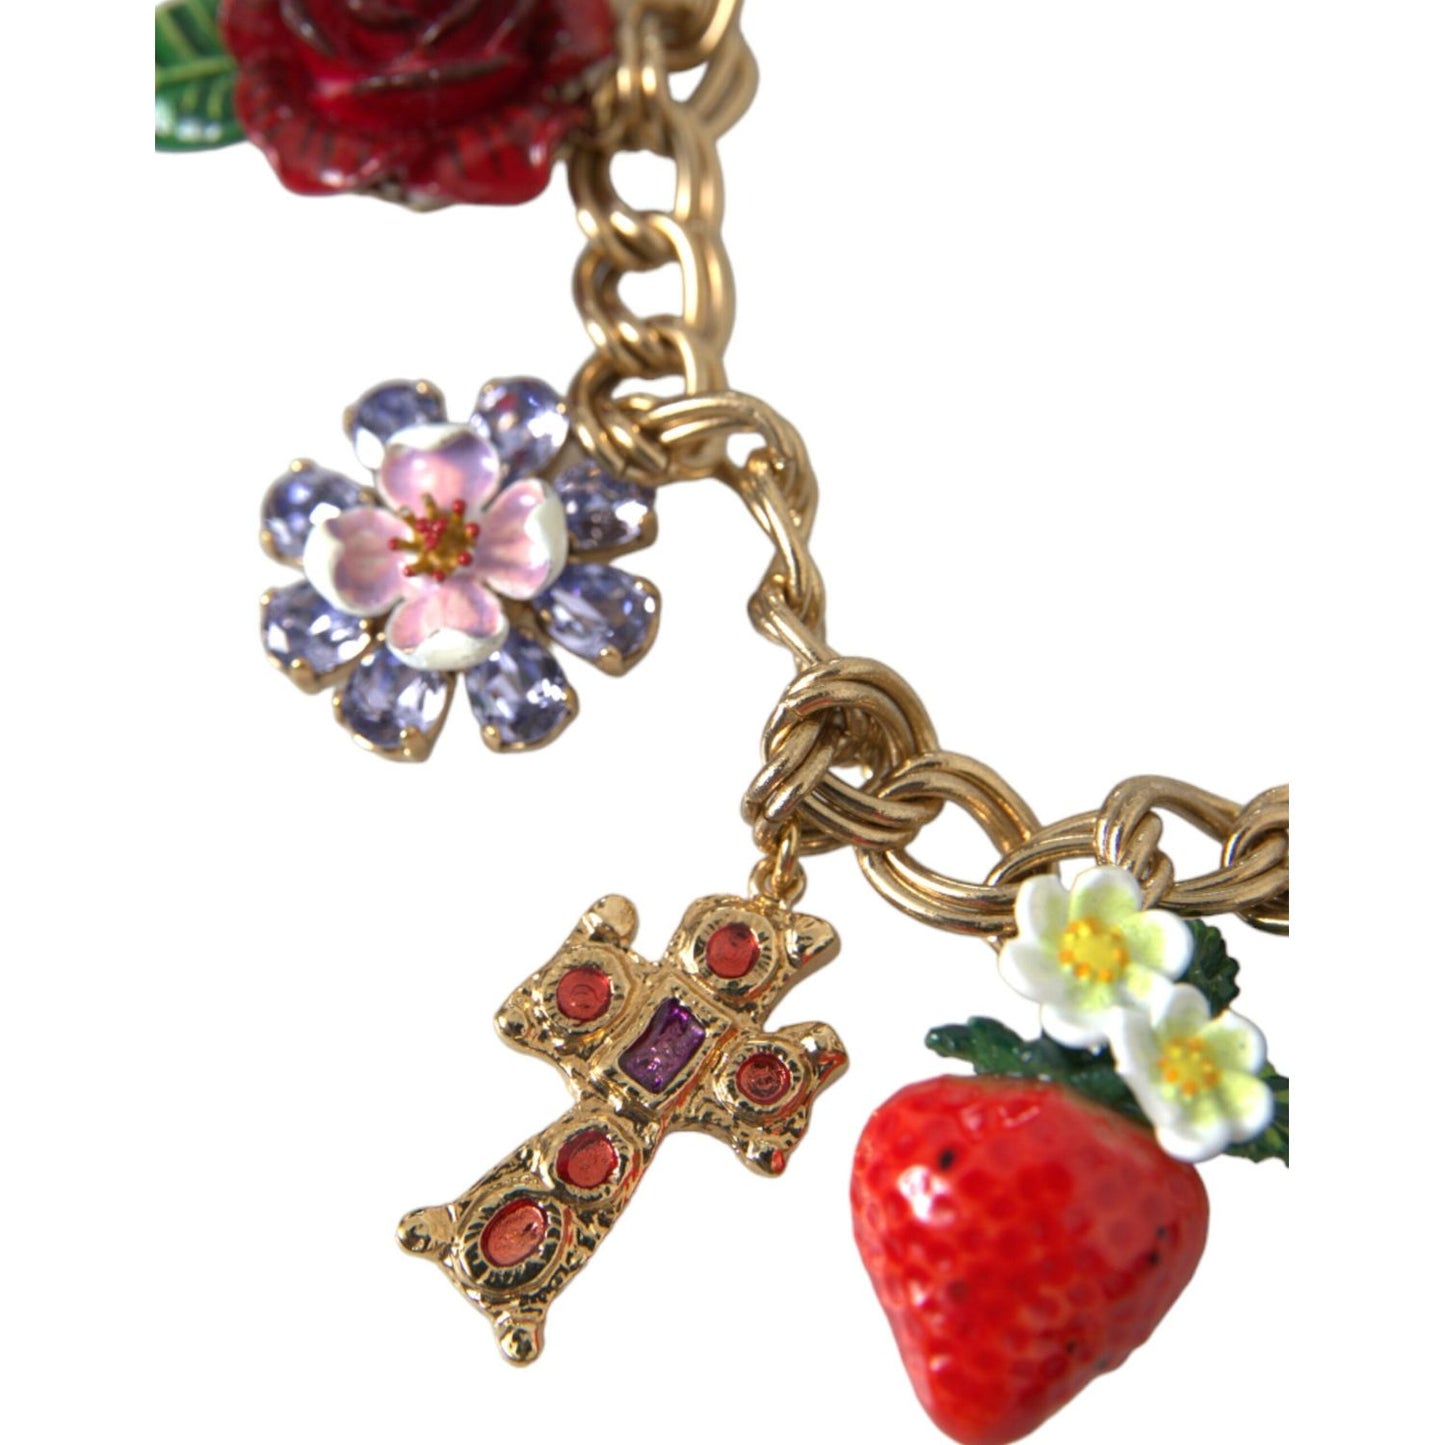 Dolce & Gabbana Gold Chain Rose Cross Strawberry Star Pendant Necklace gold-chain-rose-cross-strawberry-star-pendant-necklace